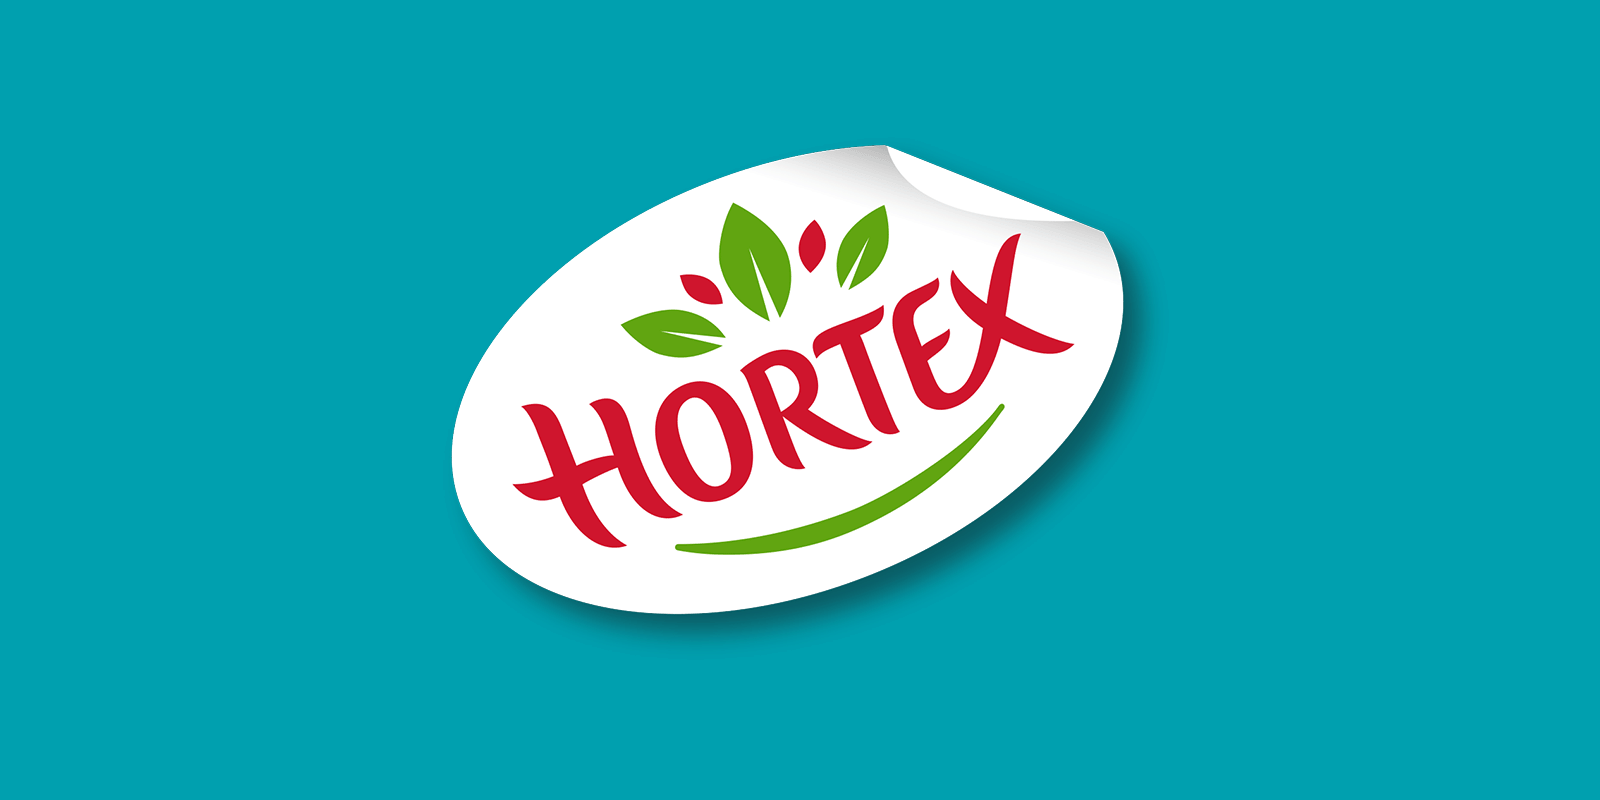 HORTEX rozstrzygnął przetarg Hortex MEDIARUN COM AI HORTEX LOGO